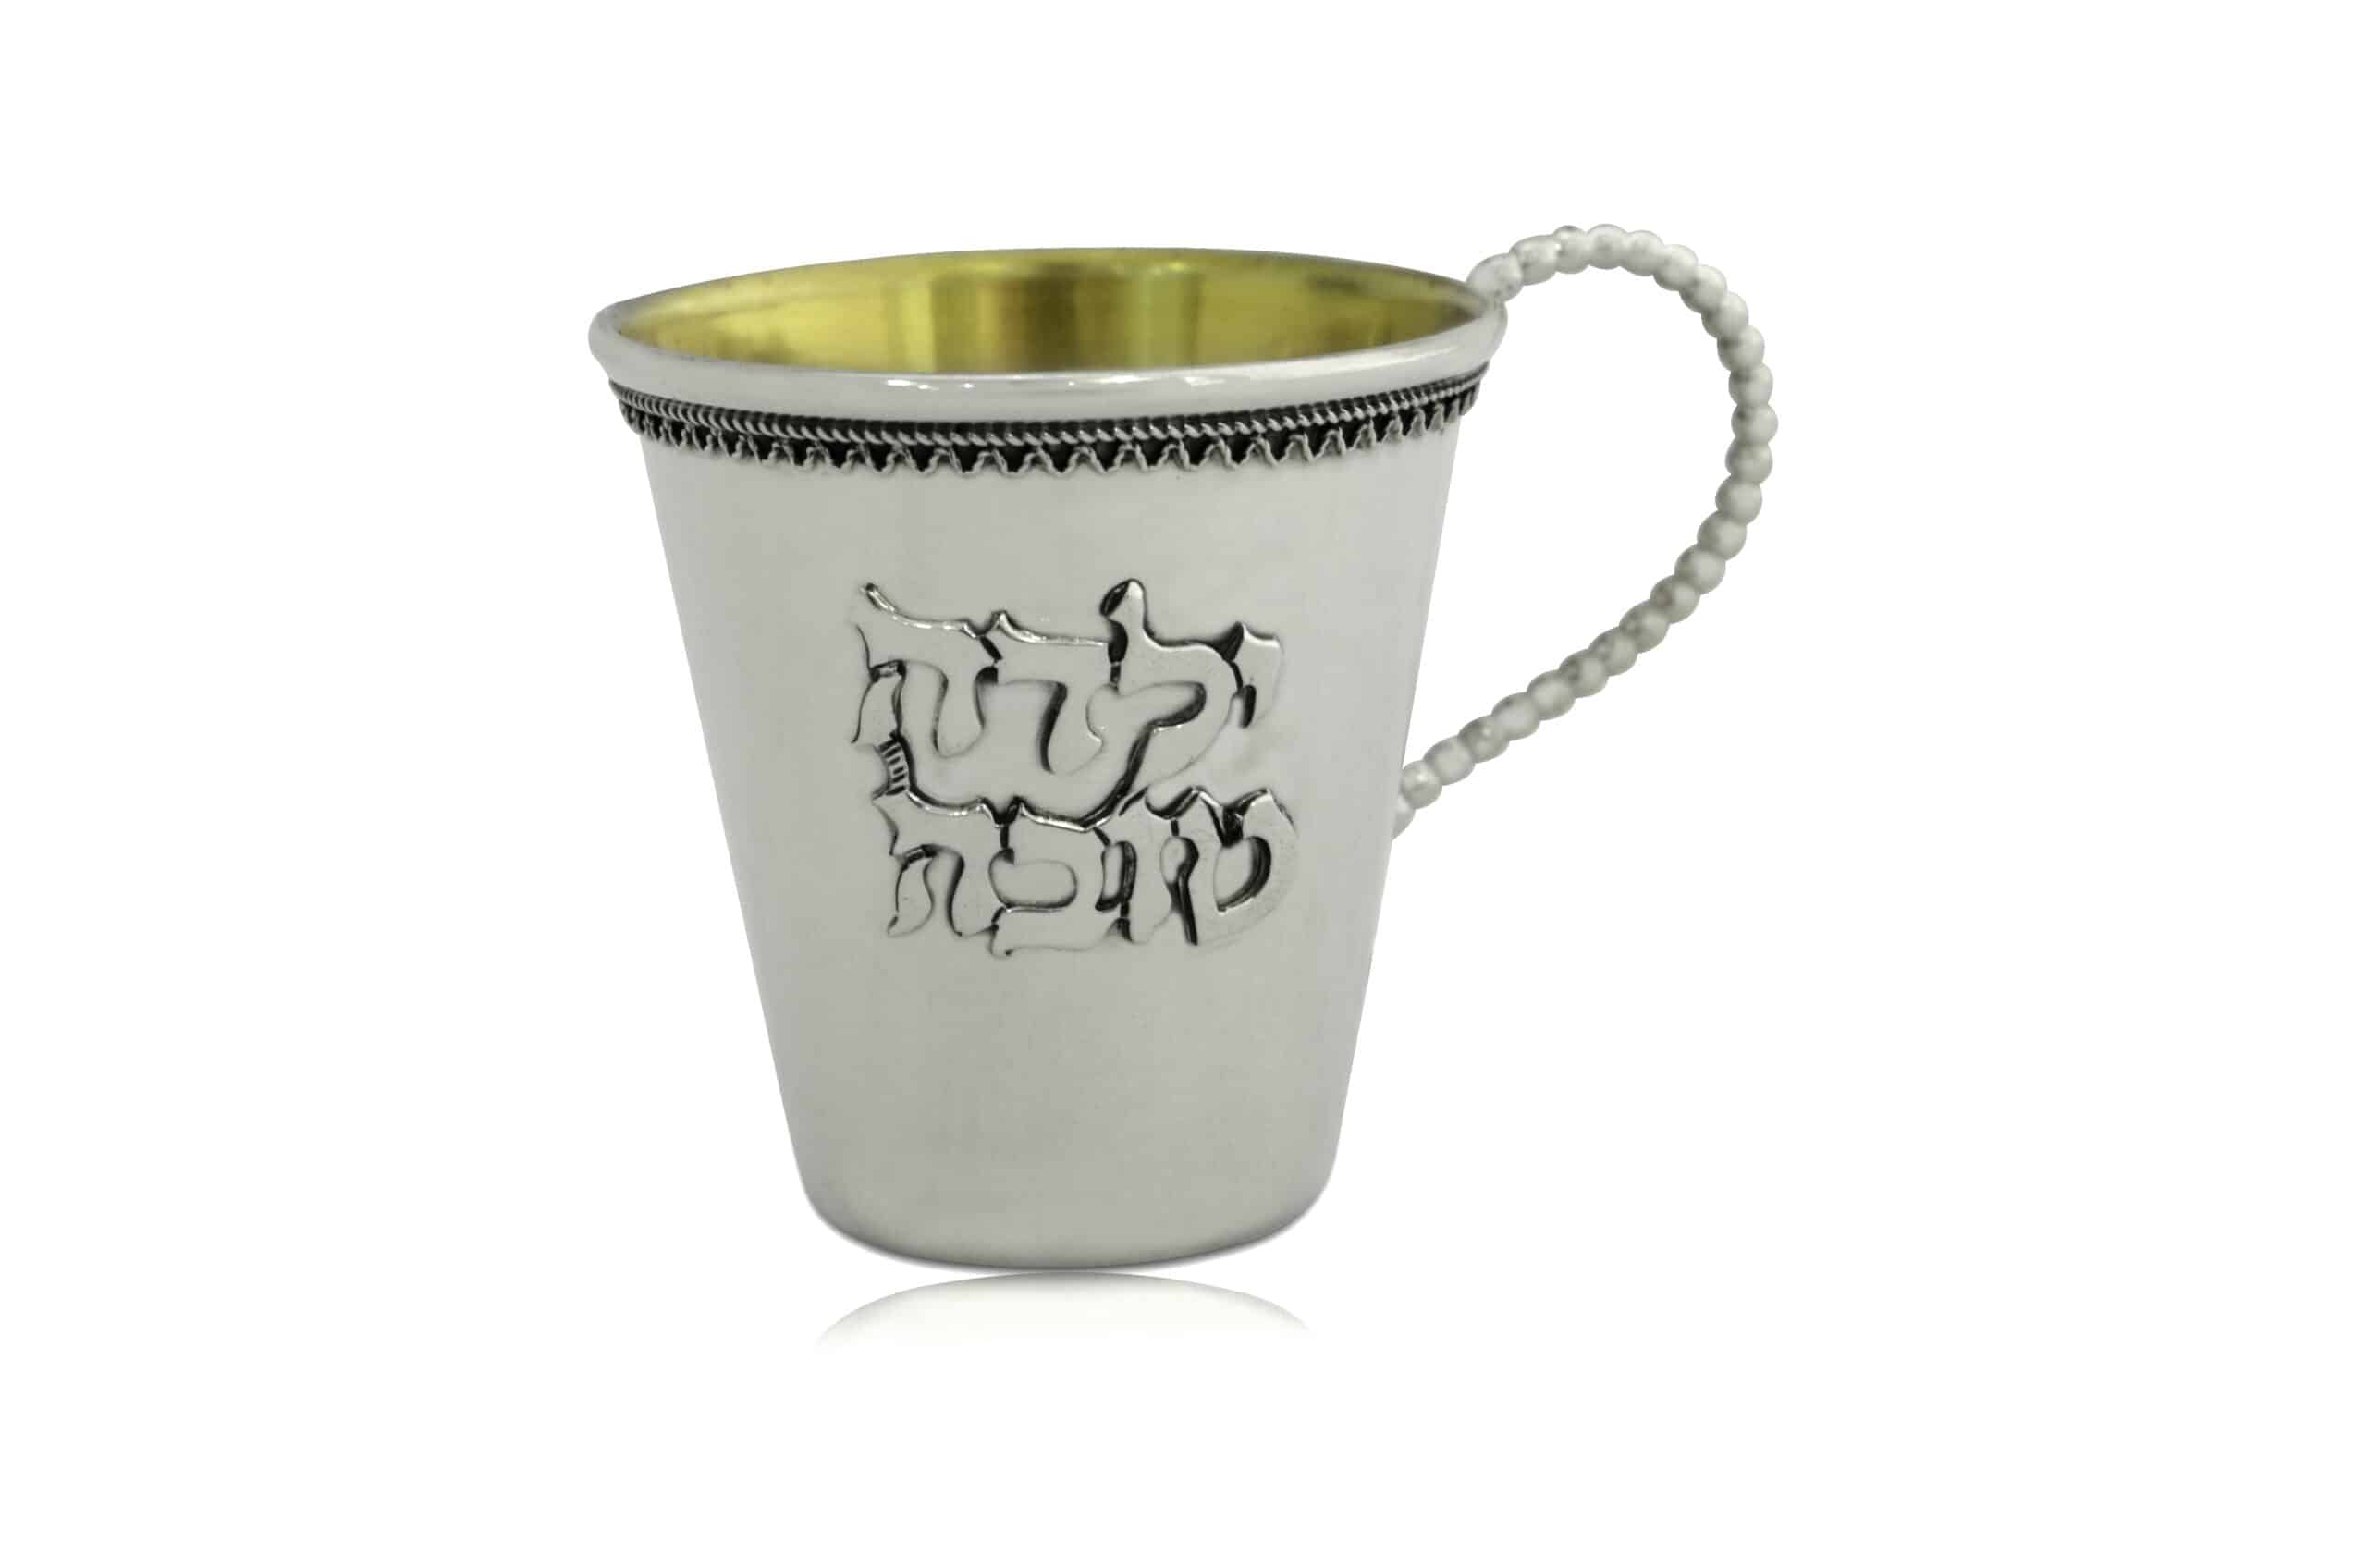 Yalda Tova Kiddush Cup Made of 925 Sterling Silver with Filigree Rim